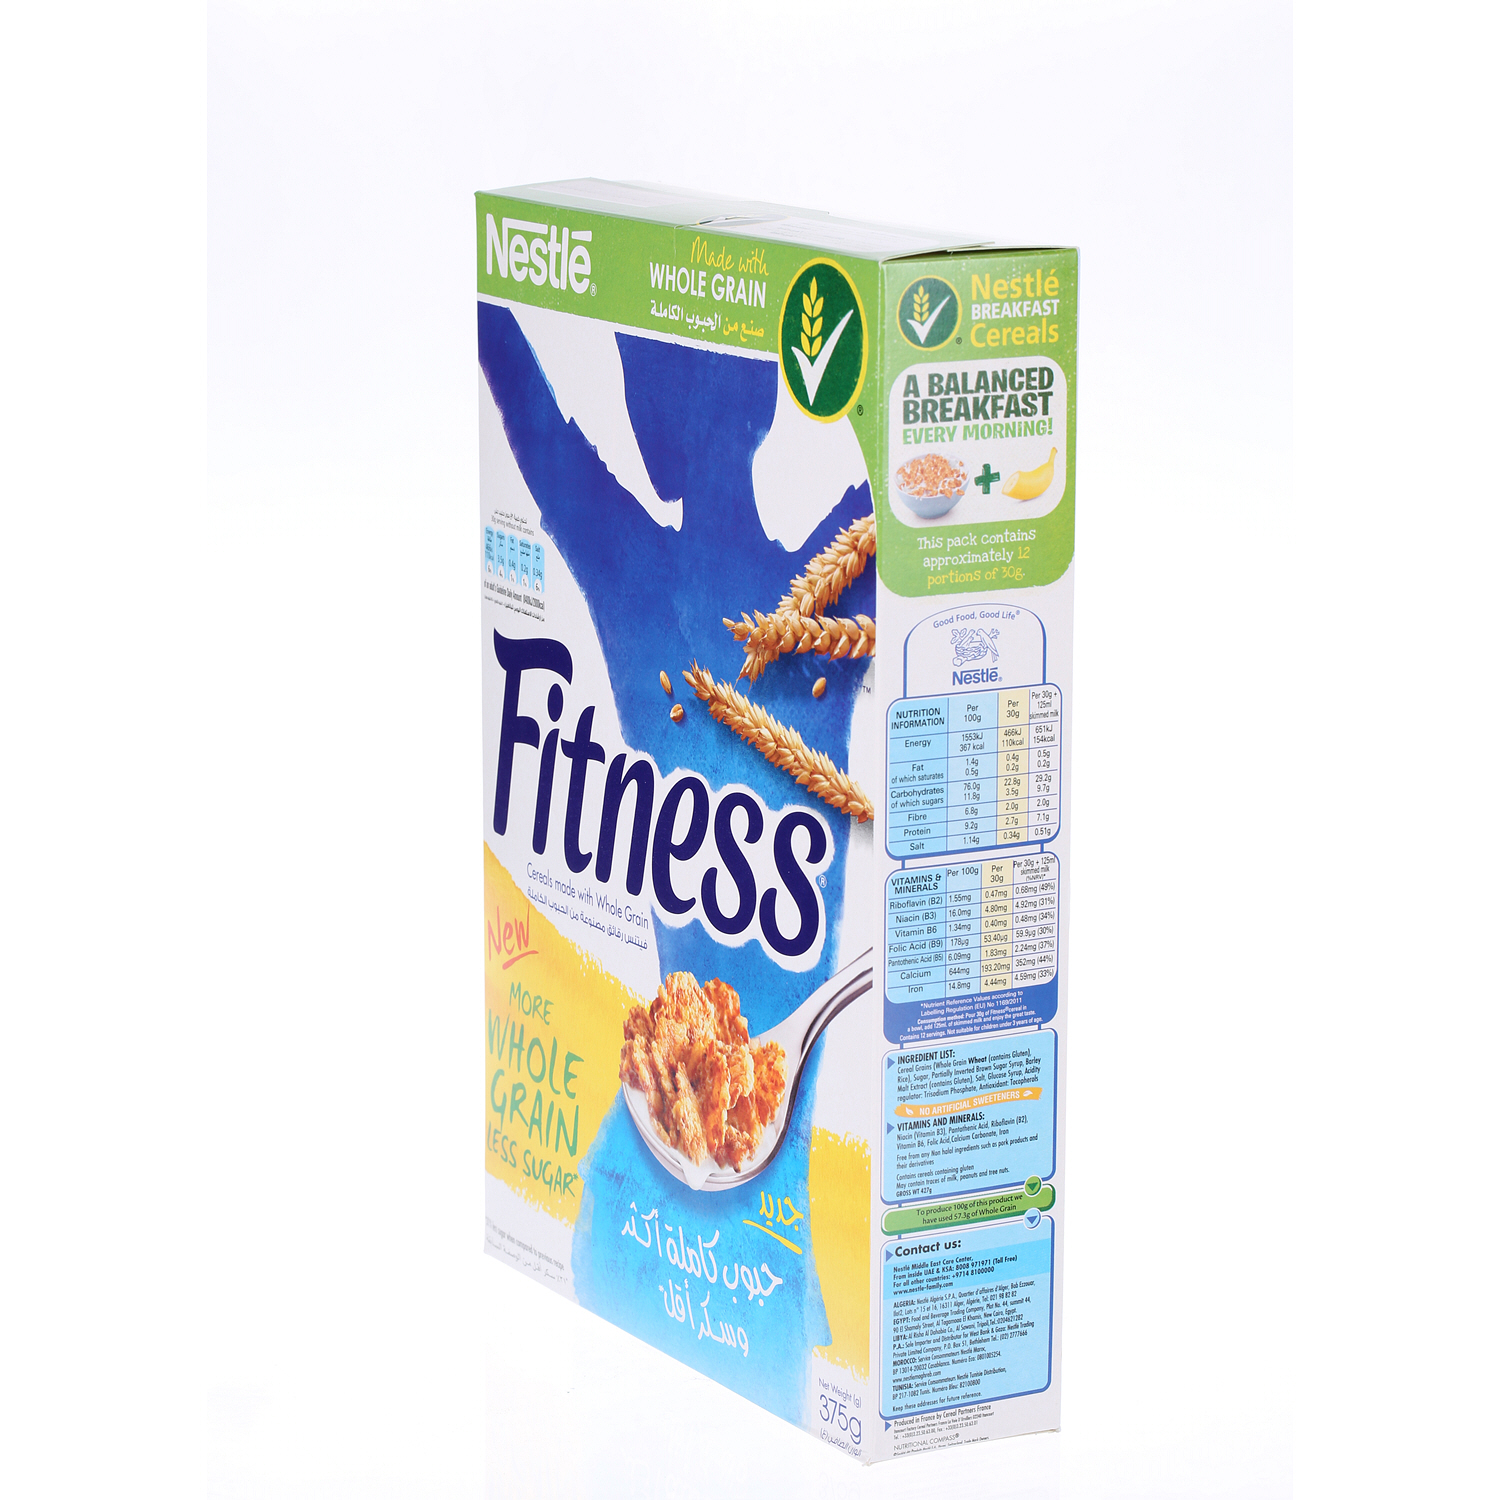 Nestlé Cereal Fitness 375gm